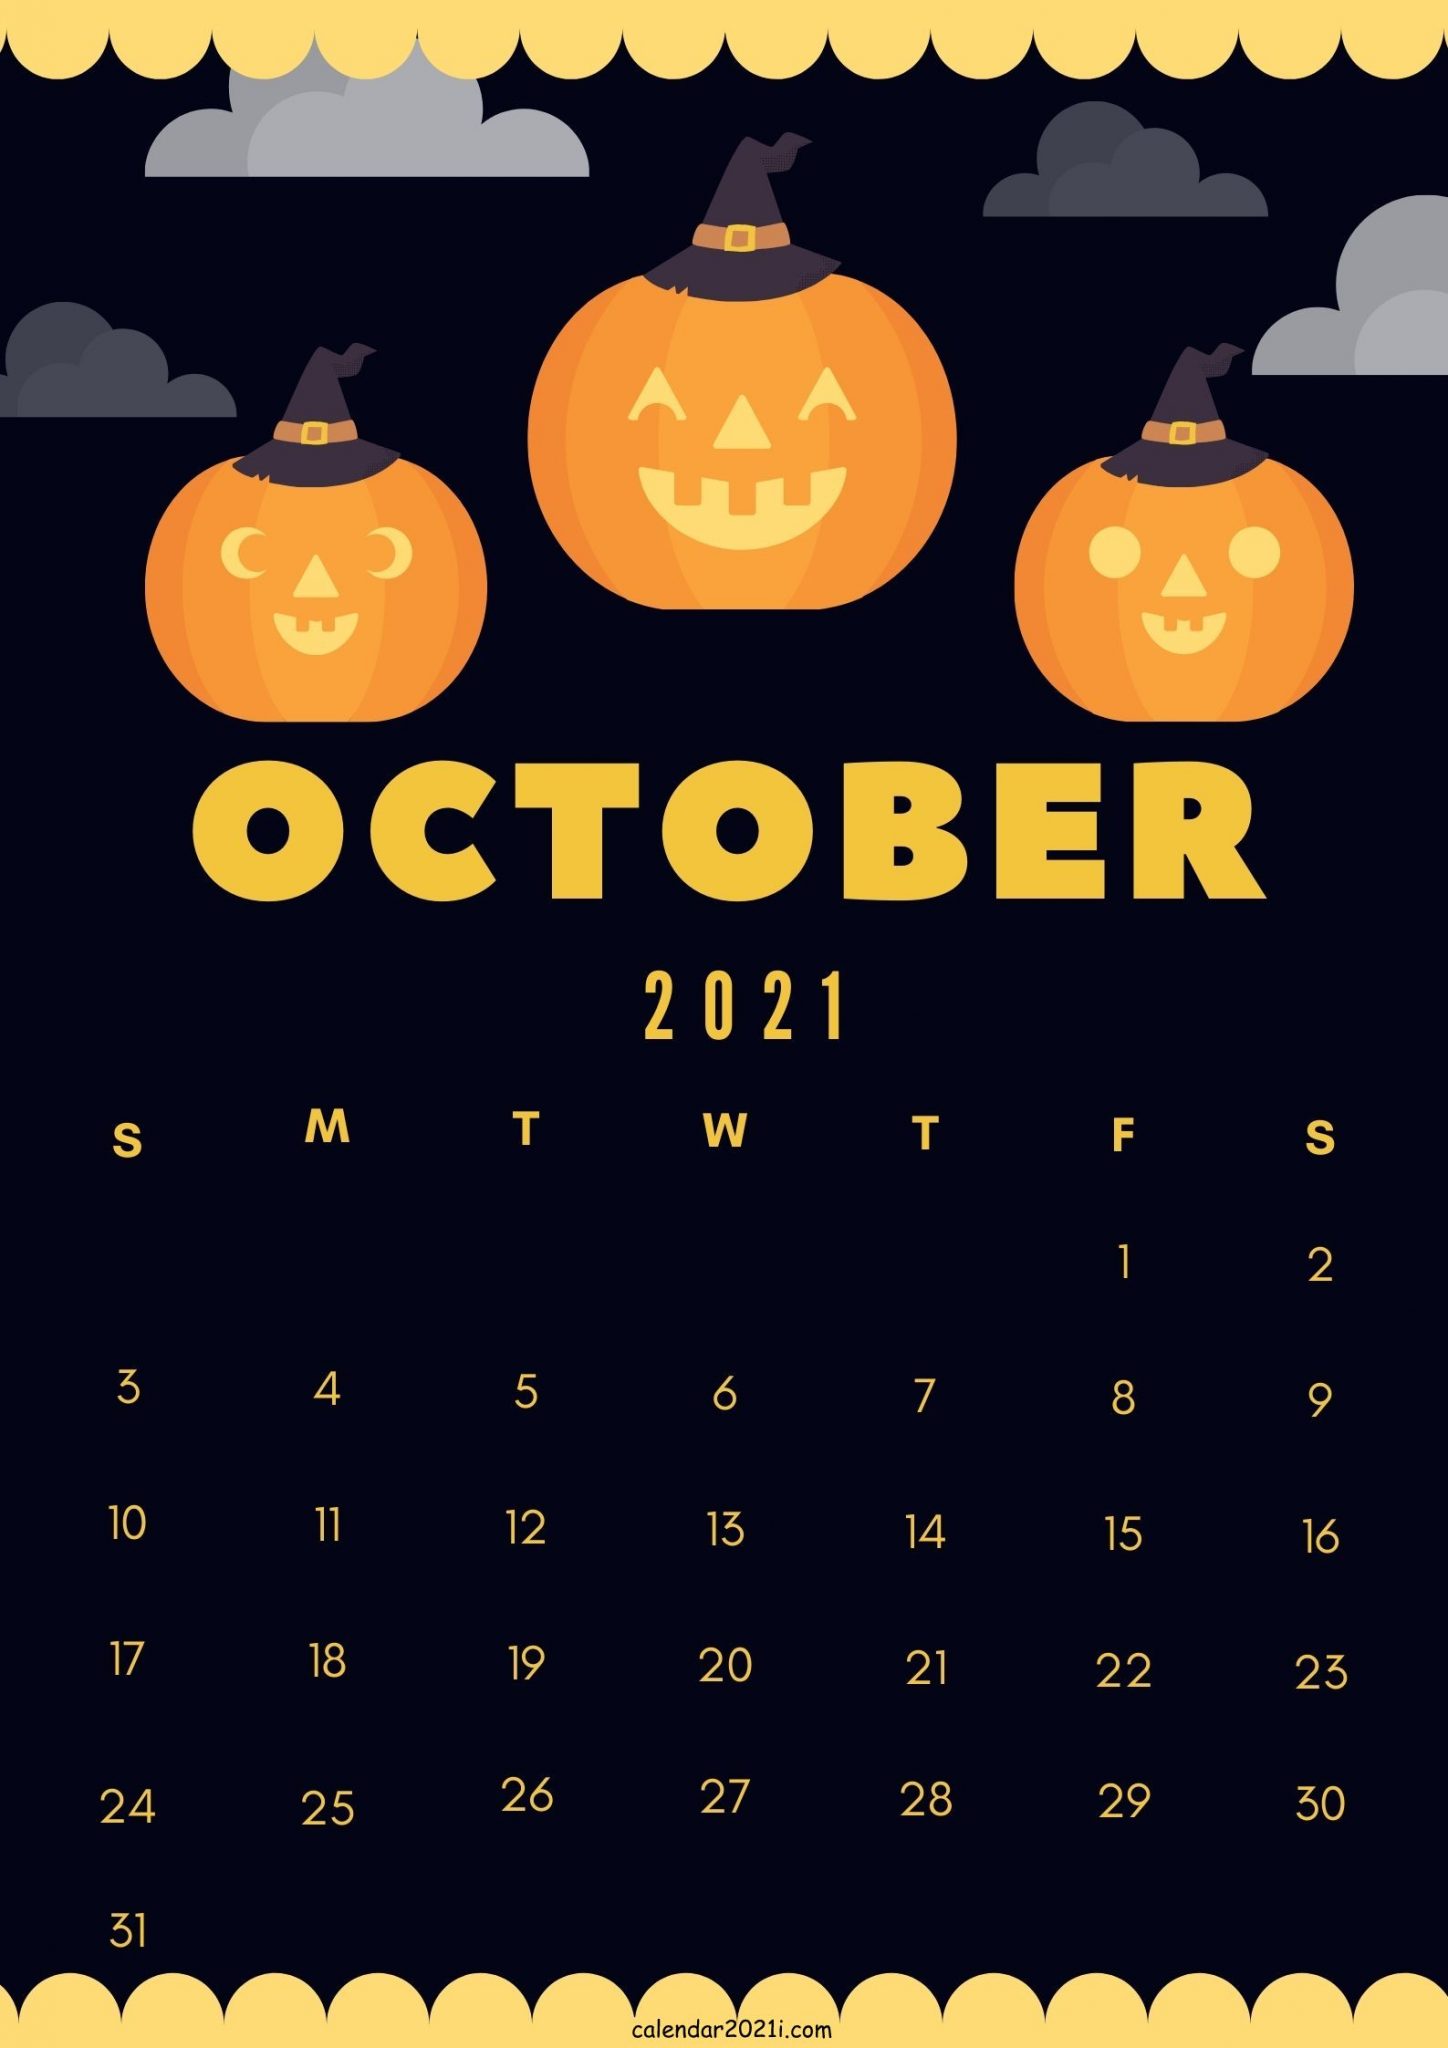 October 2021 Cute Calendar Design